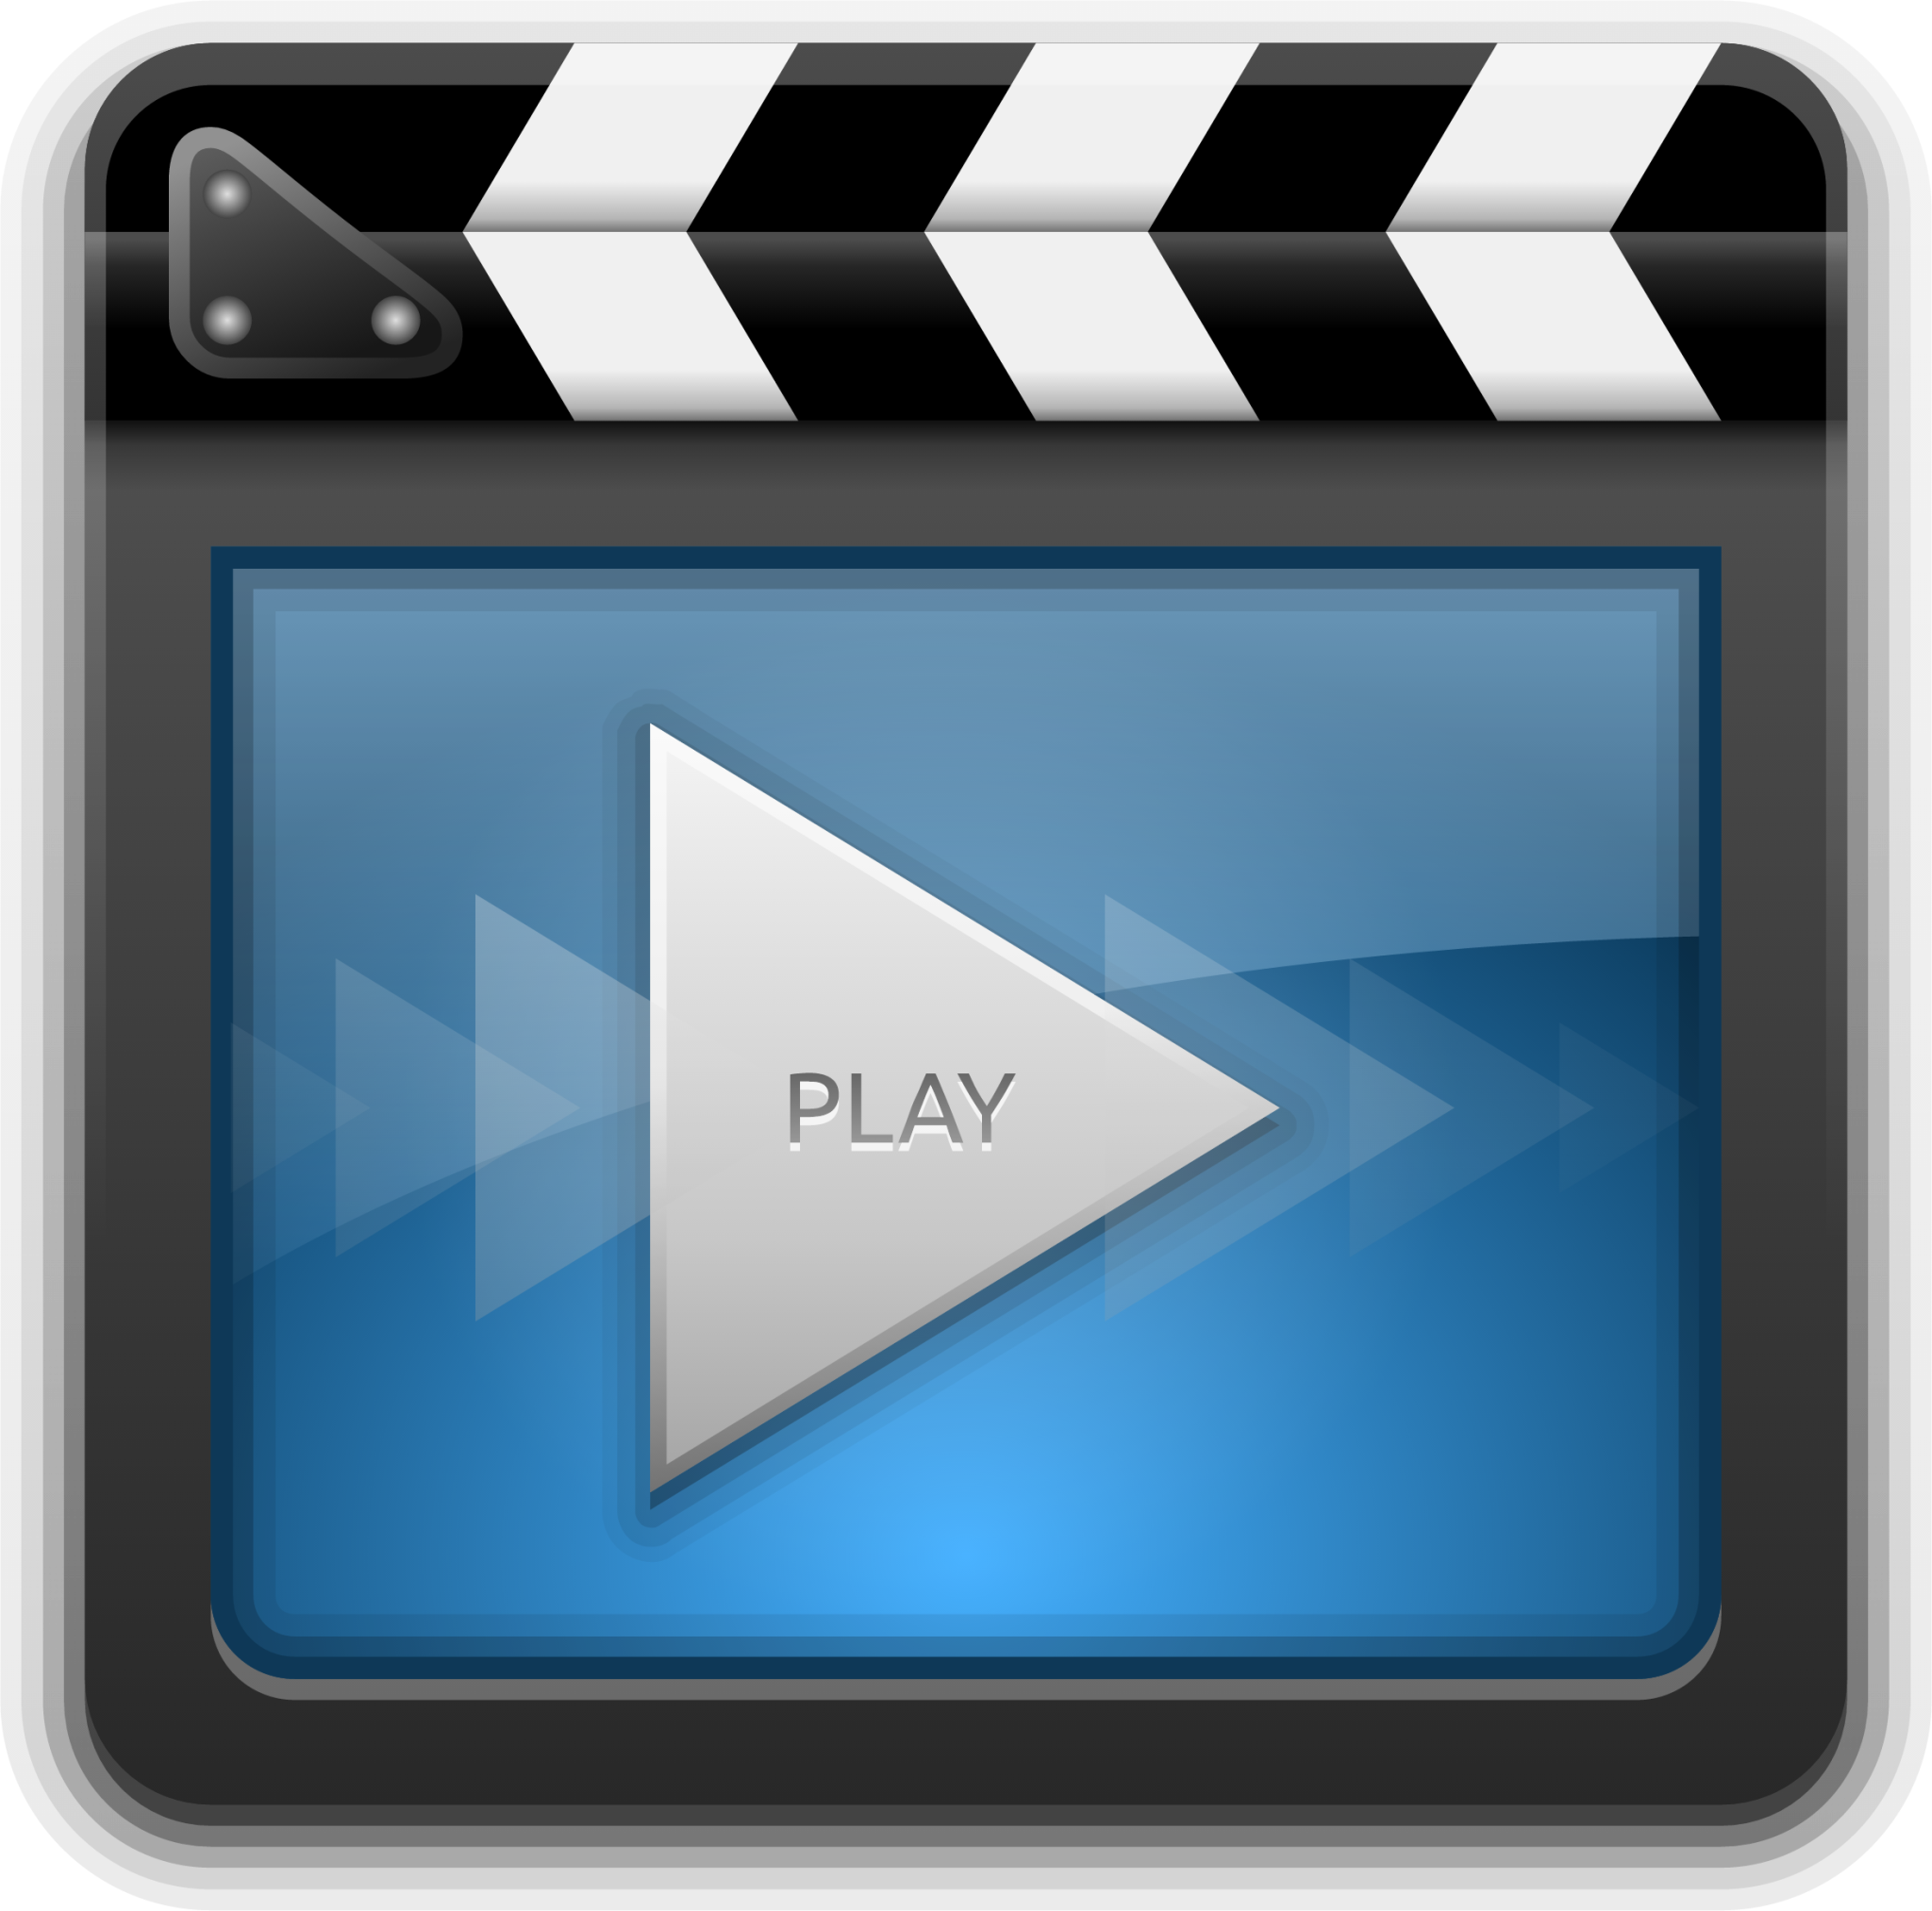 Video editor - Free edit tools icons